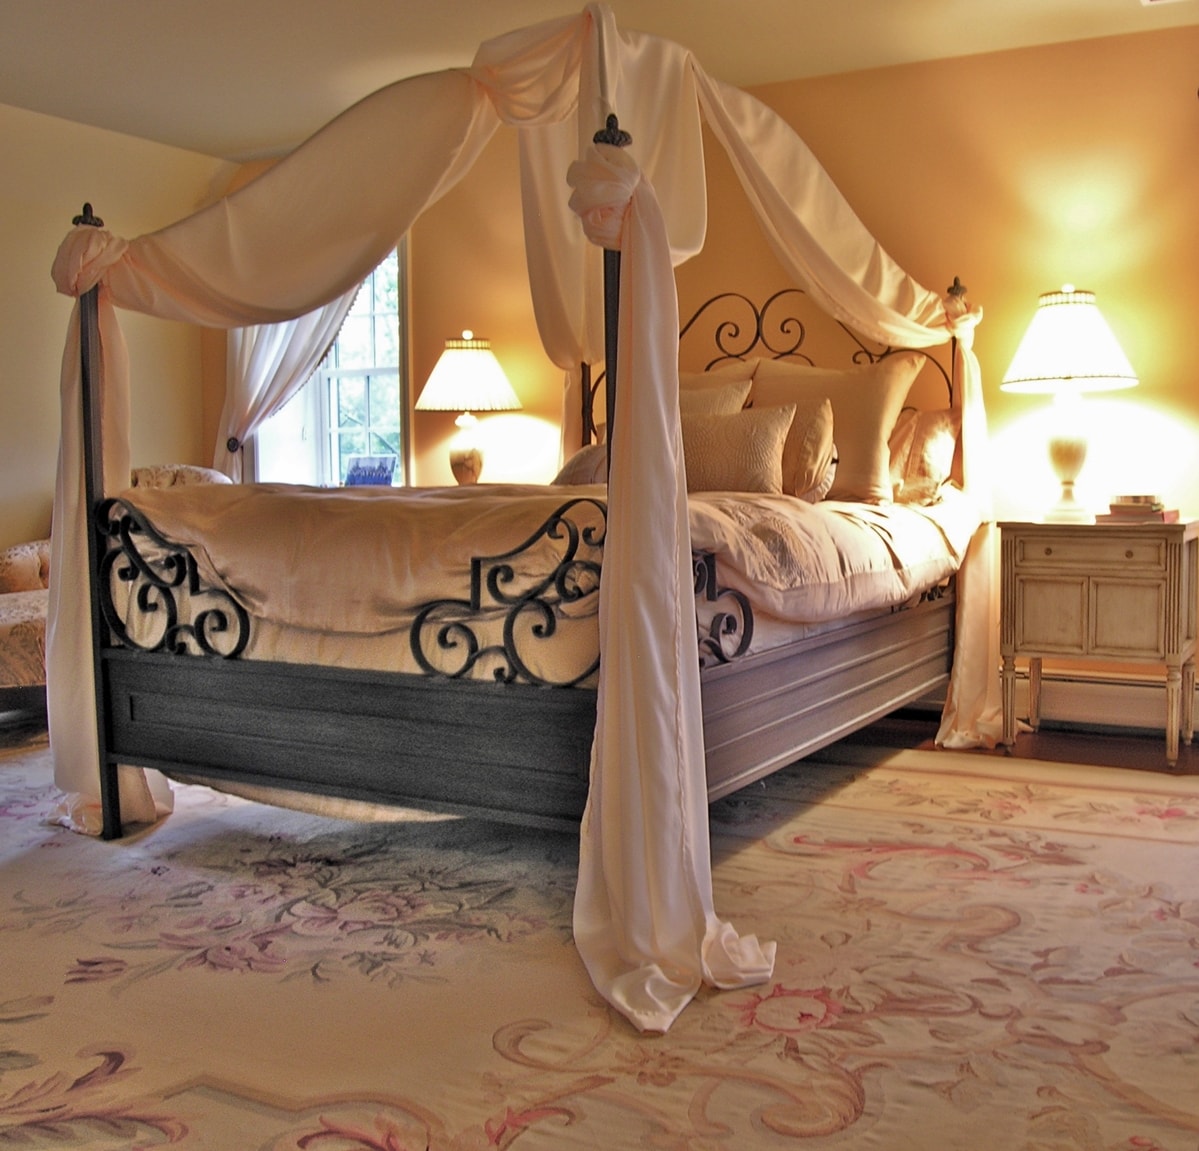 Интерьер спальной комнаты в стиле романтизм